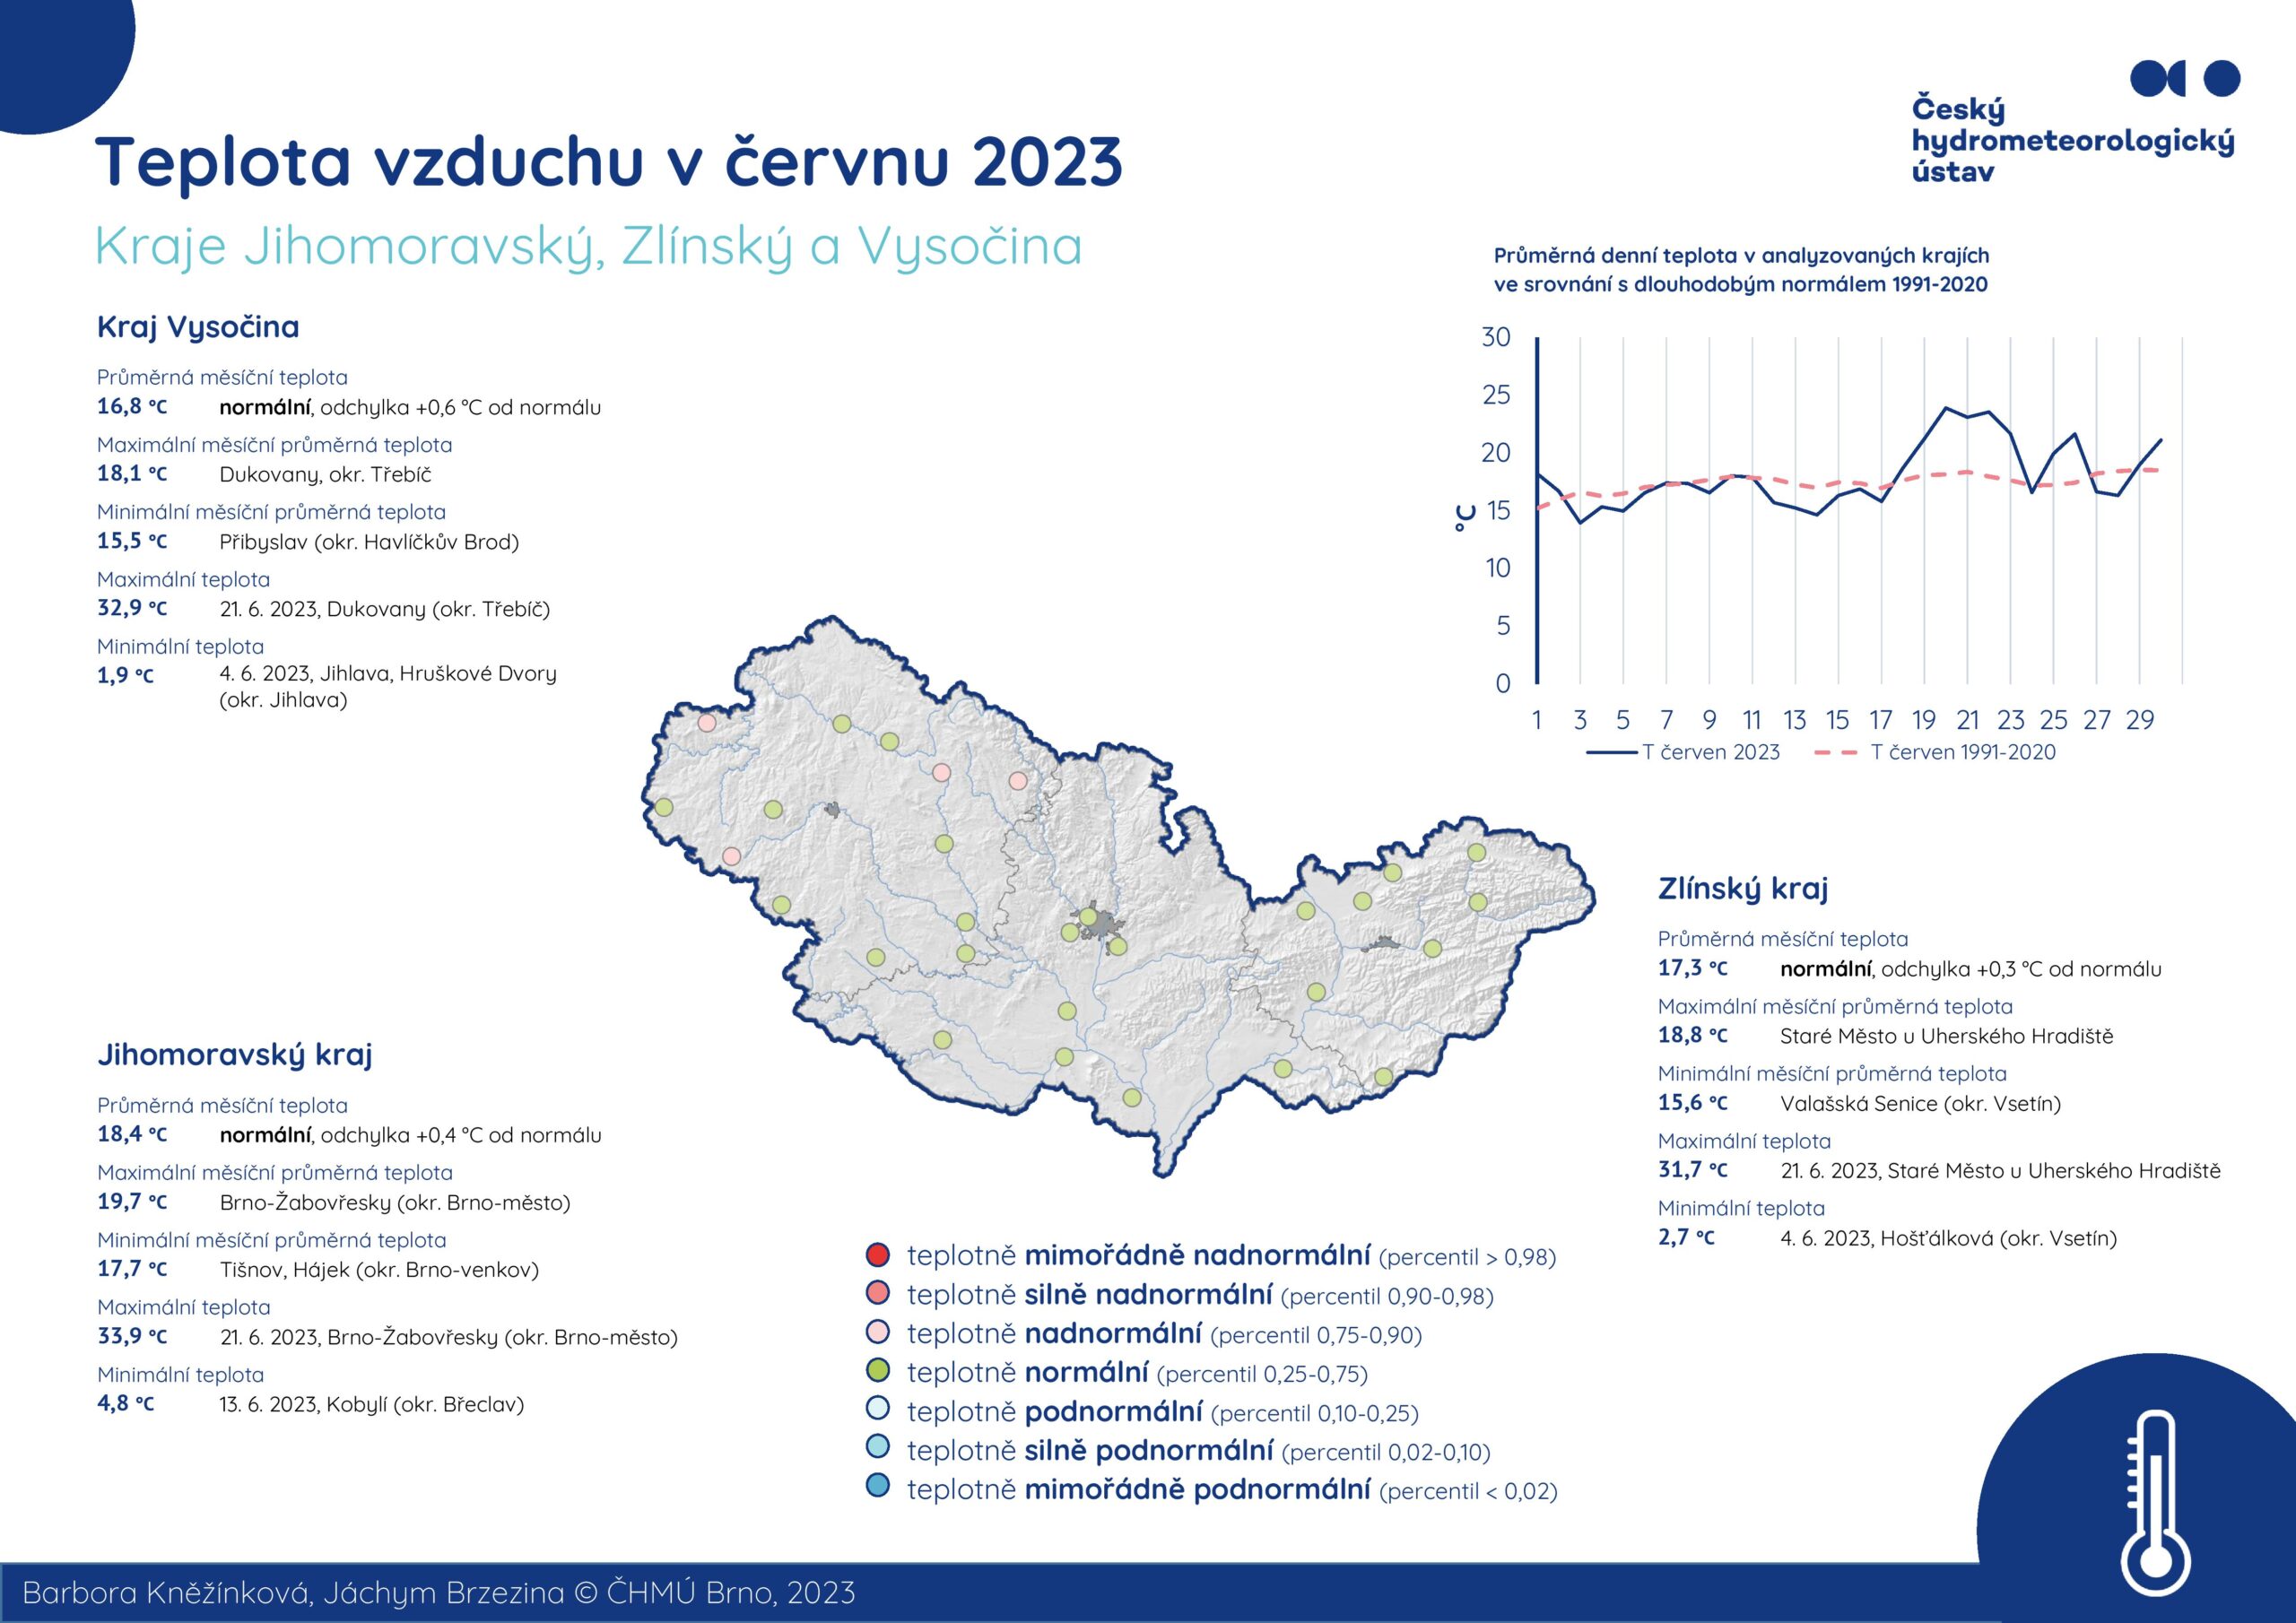 Teplota vzduchu v červnu 2023 – Jihomoravský kraj, Zlínský kraj a Kraj Vysočina1 min čtení